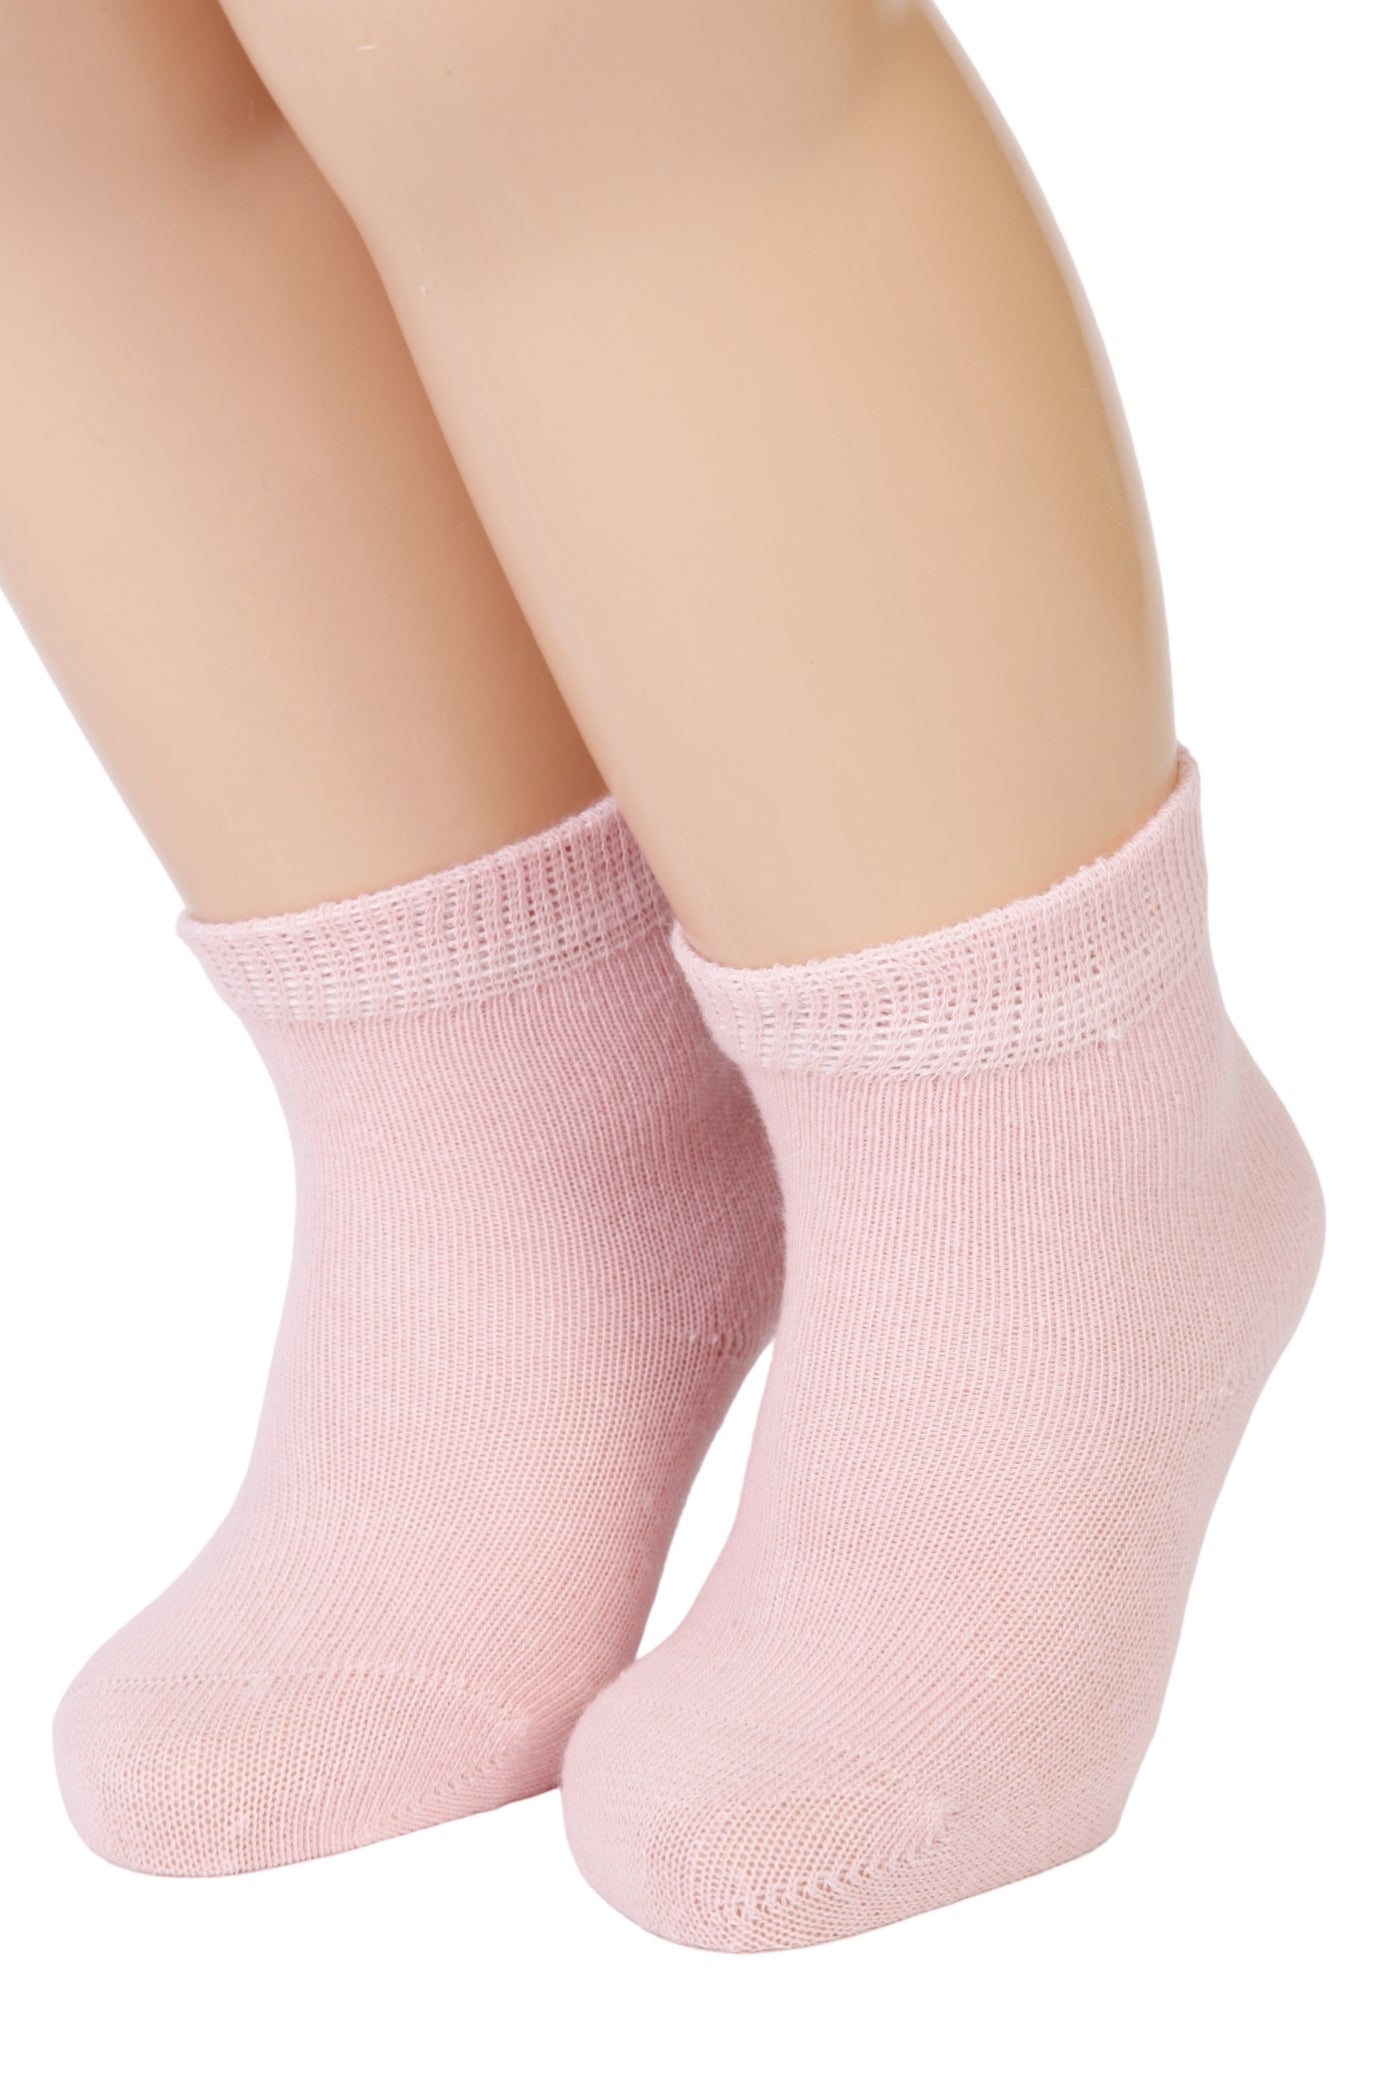 Light Pink Socks For Babies